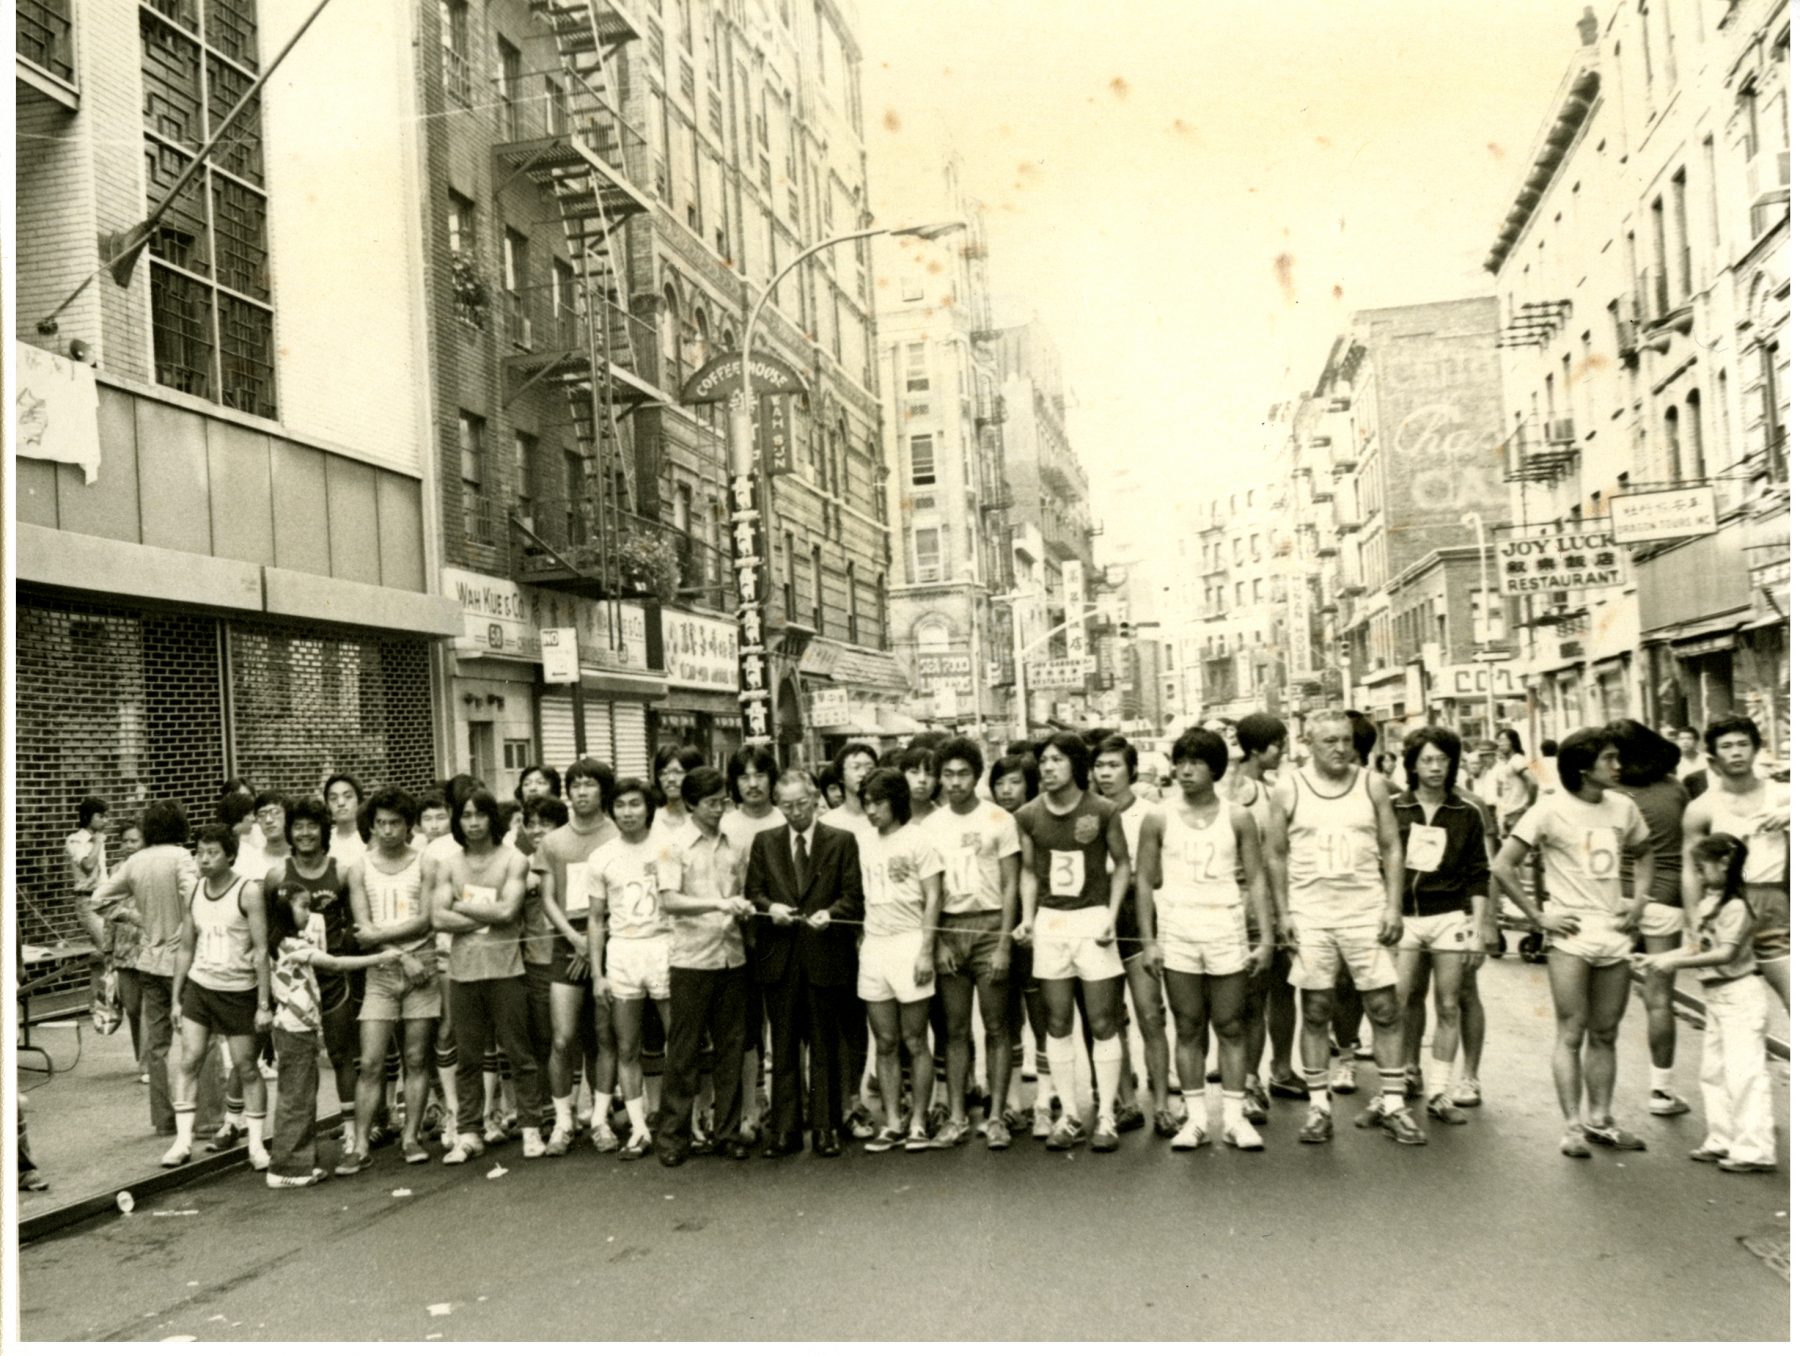 02 April 2019 Posted.
New York Chinatown Mini-Marathon, 1977.
Photographs taken by Emile Bocian, Museum of Chinese in America (MOCA) Collection.
纽约华埠迷你马拉松赛事，1977年。照片由Emile Bocian（包信）拍摄，美国华人博物馆（MOCA）馆藏